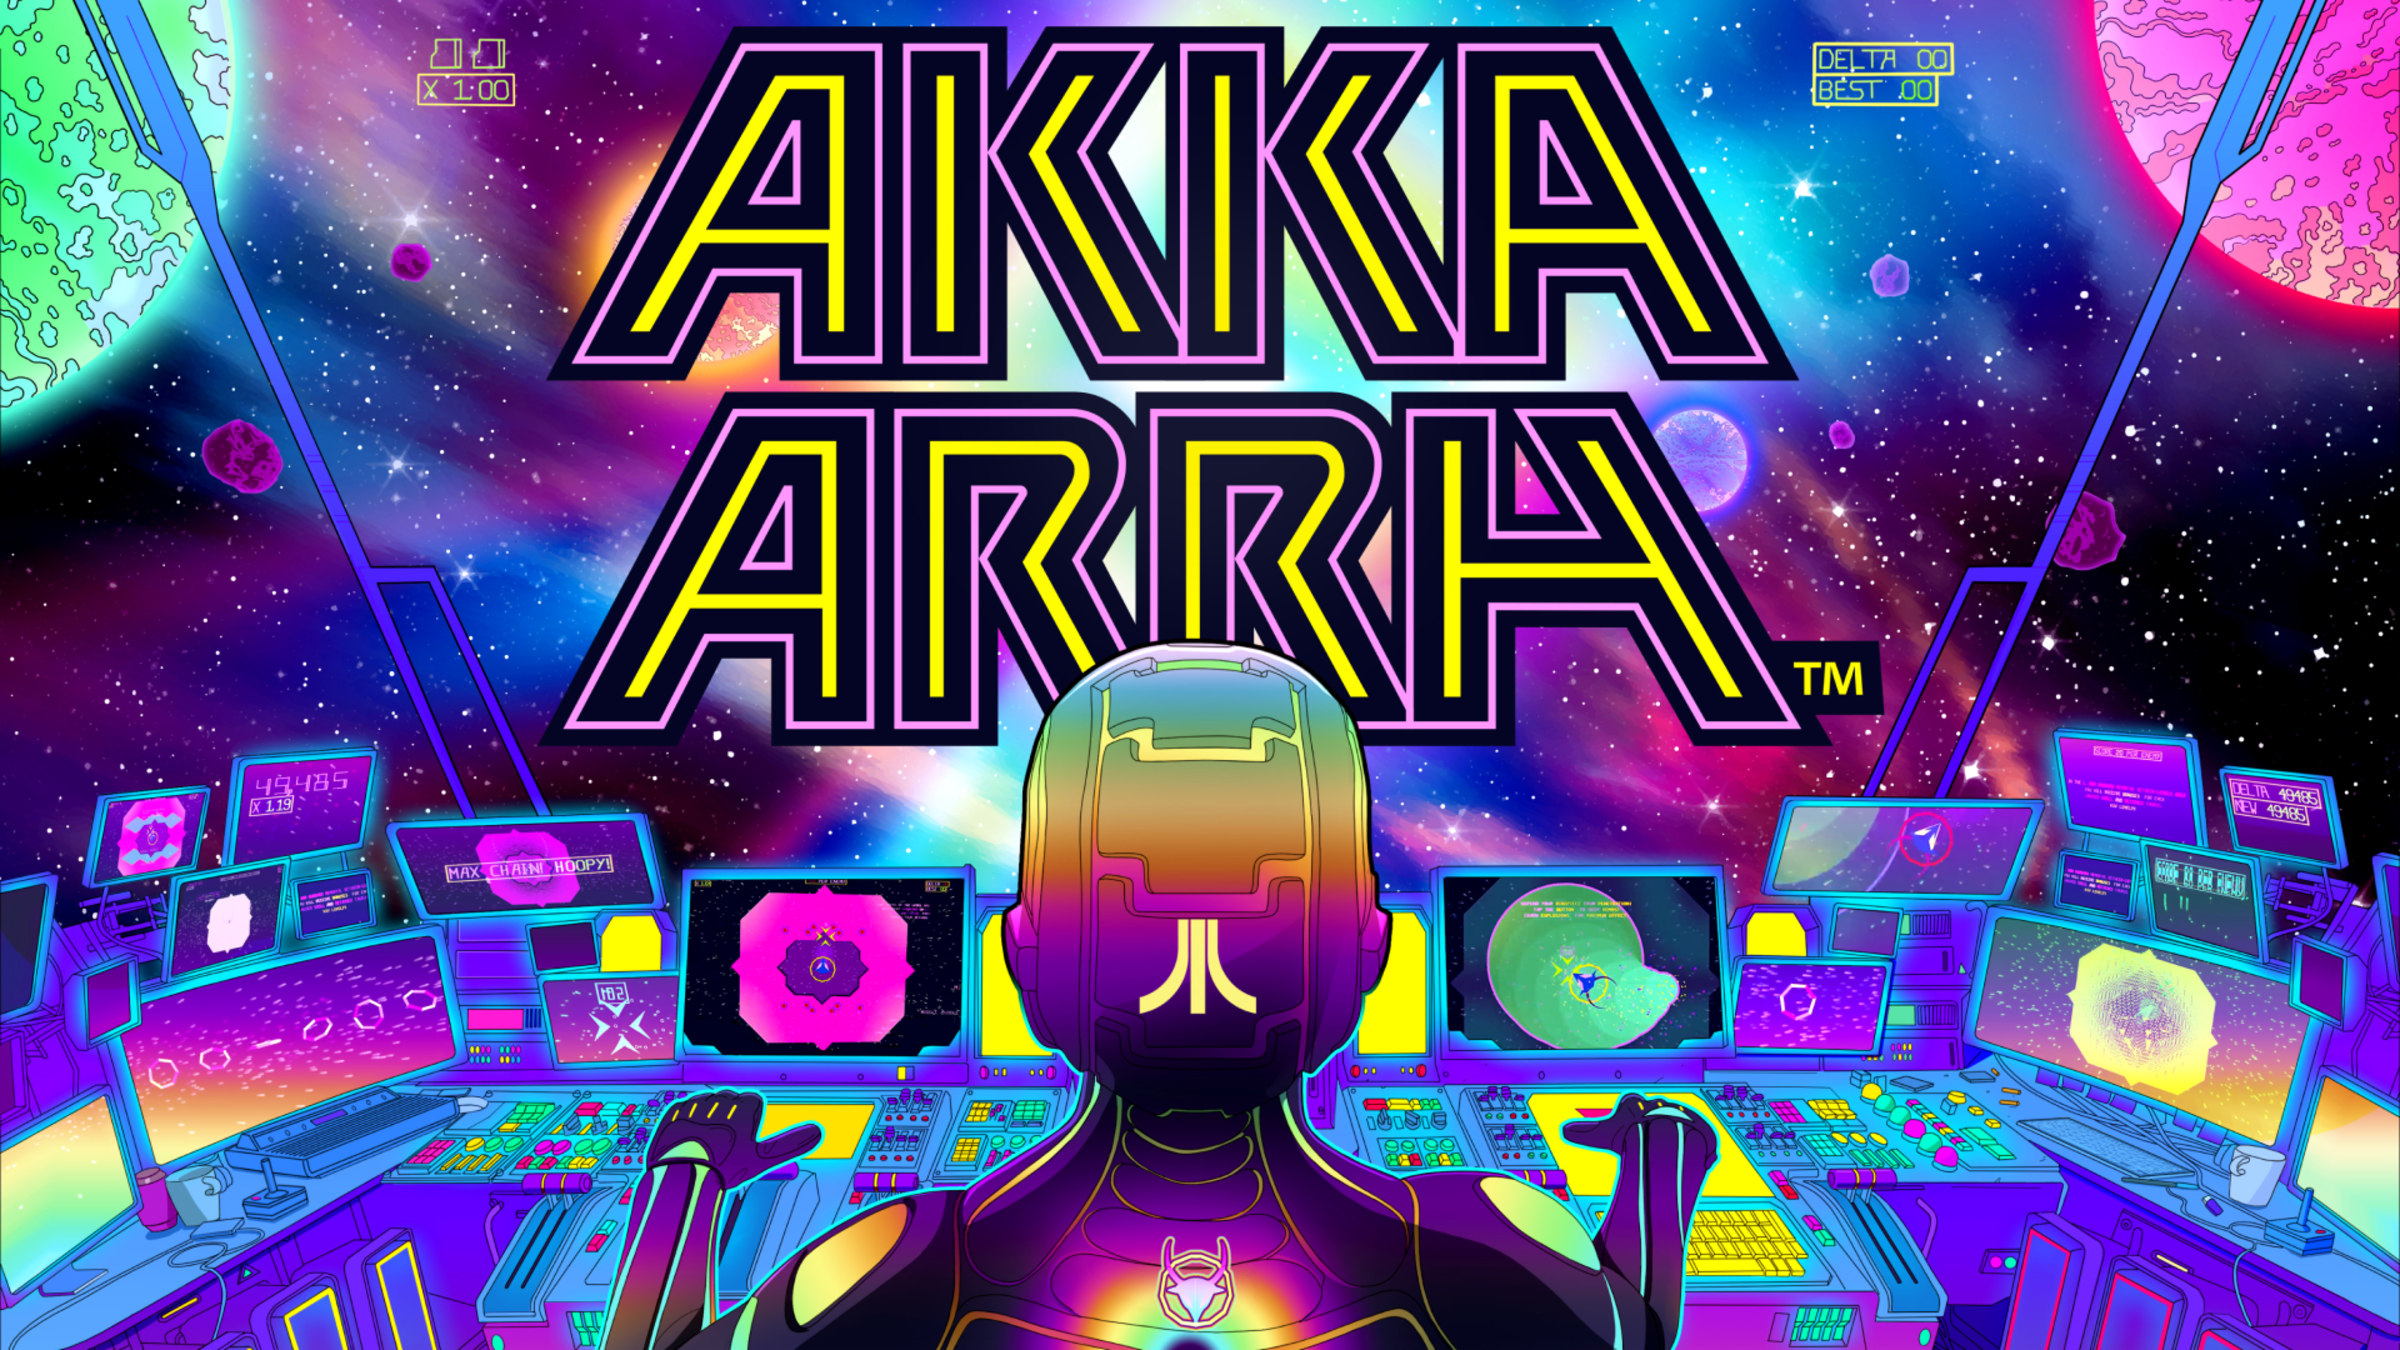 Akka Arrh Xbox Version Full Game Setup Free Download